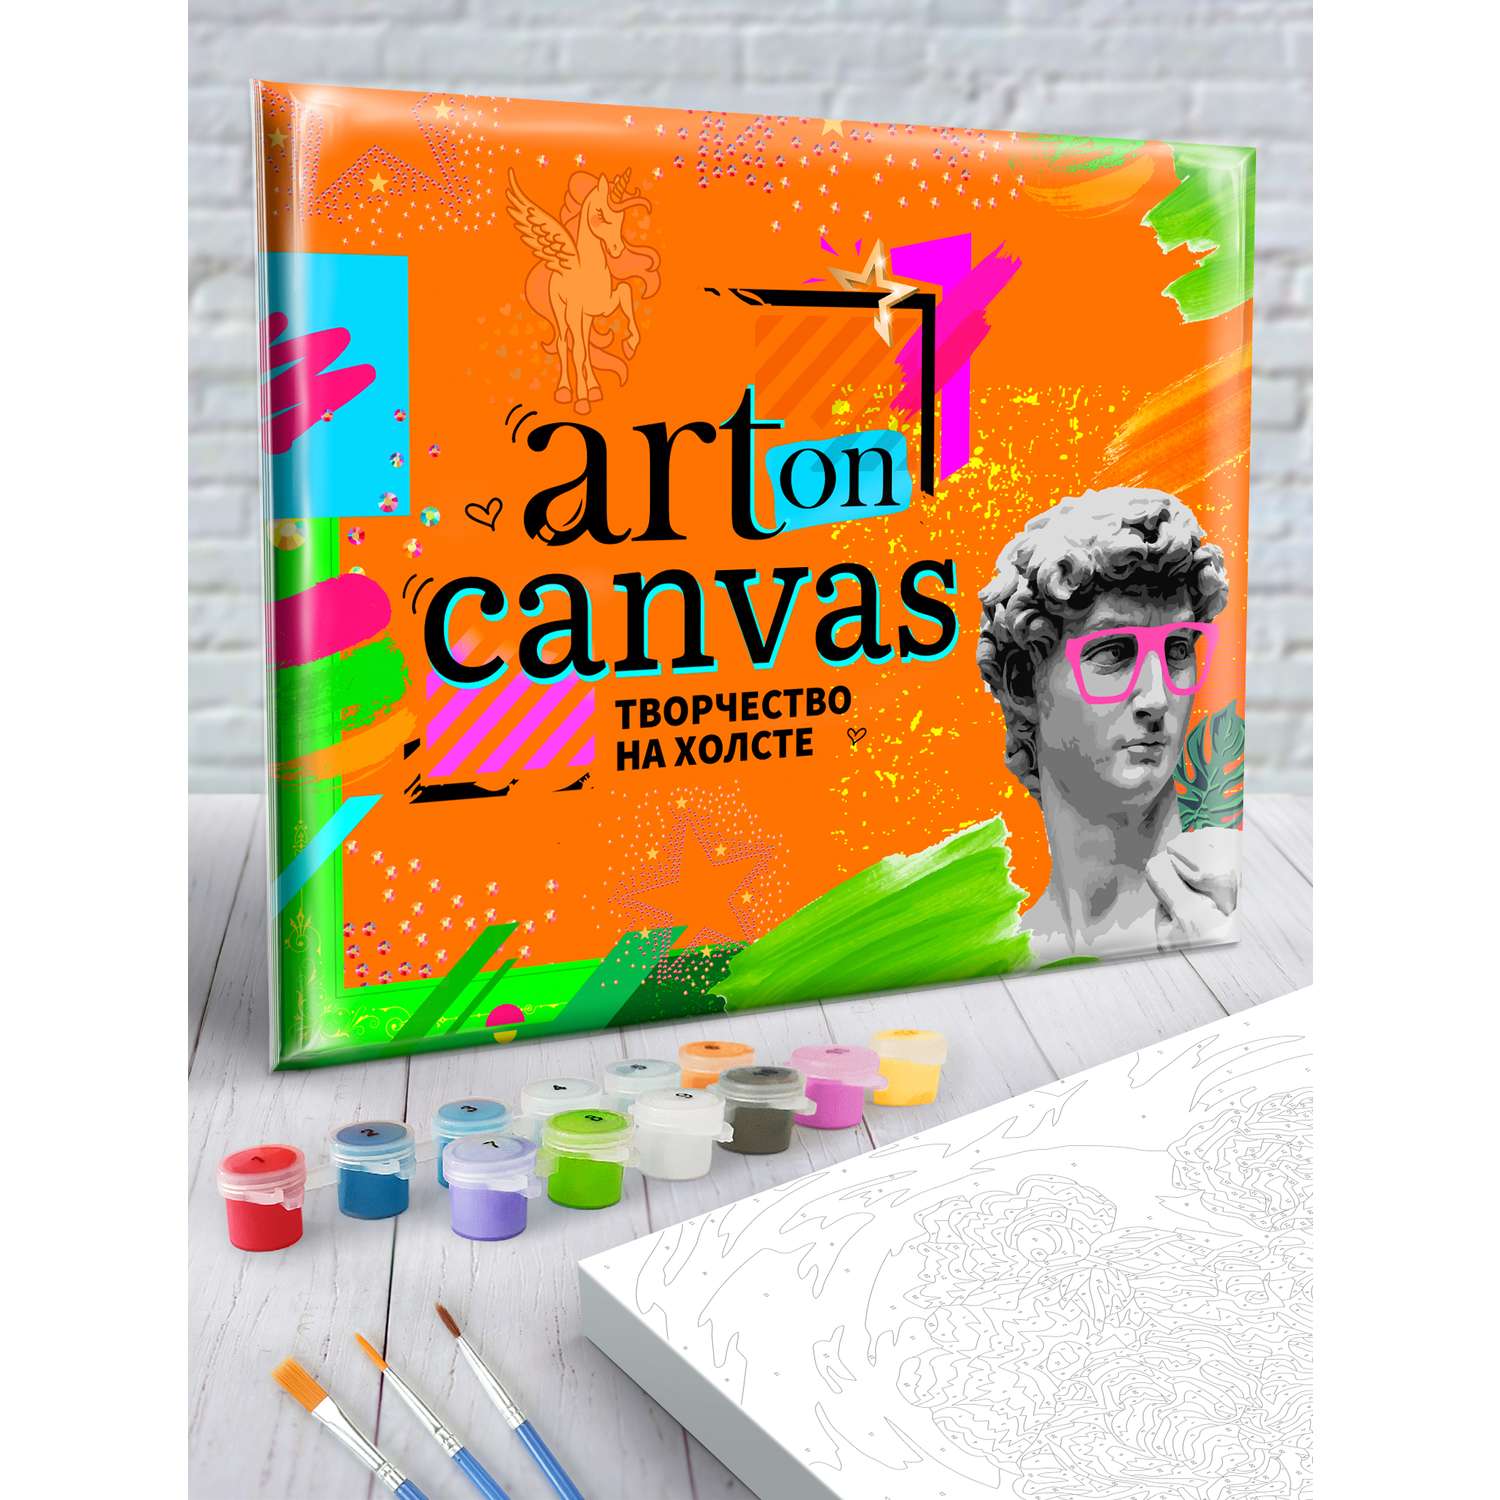 Картина по номерам Art on Canvas История Игрушек холст на подрамнике 40х50 см - фото 7